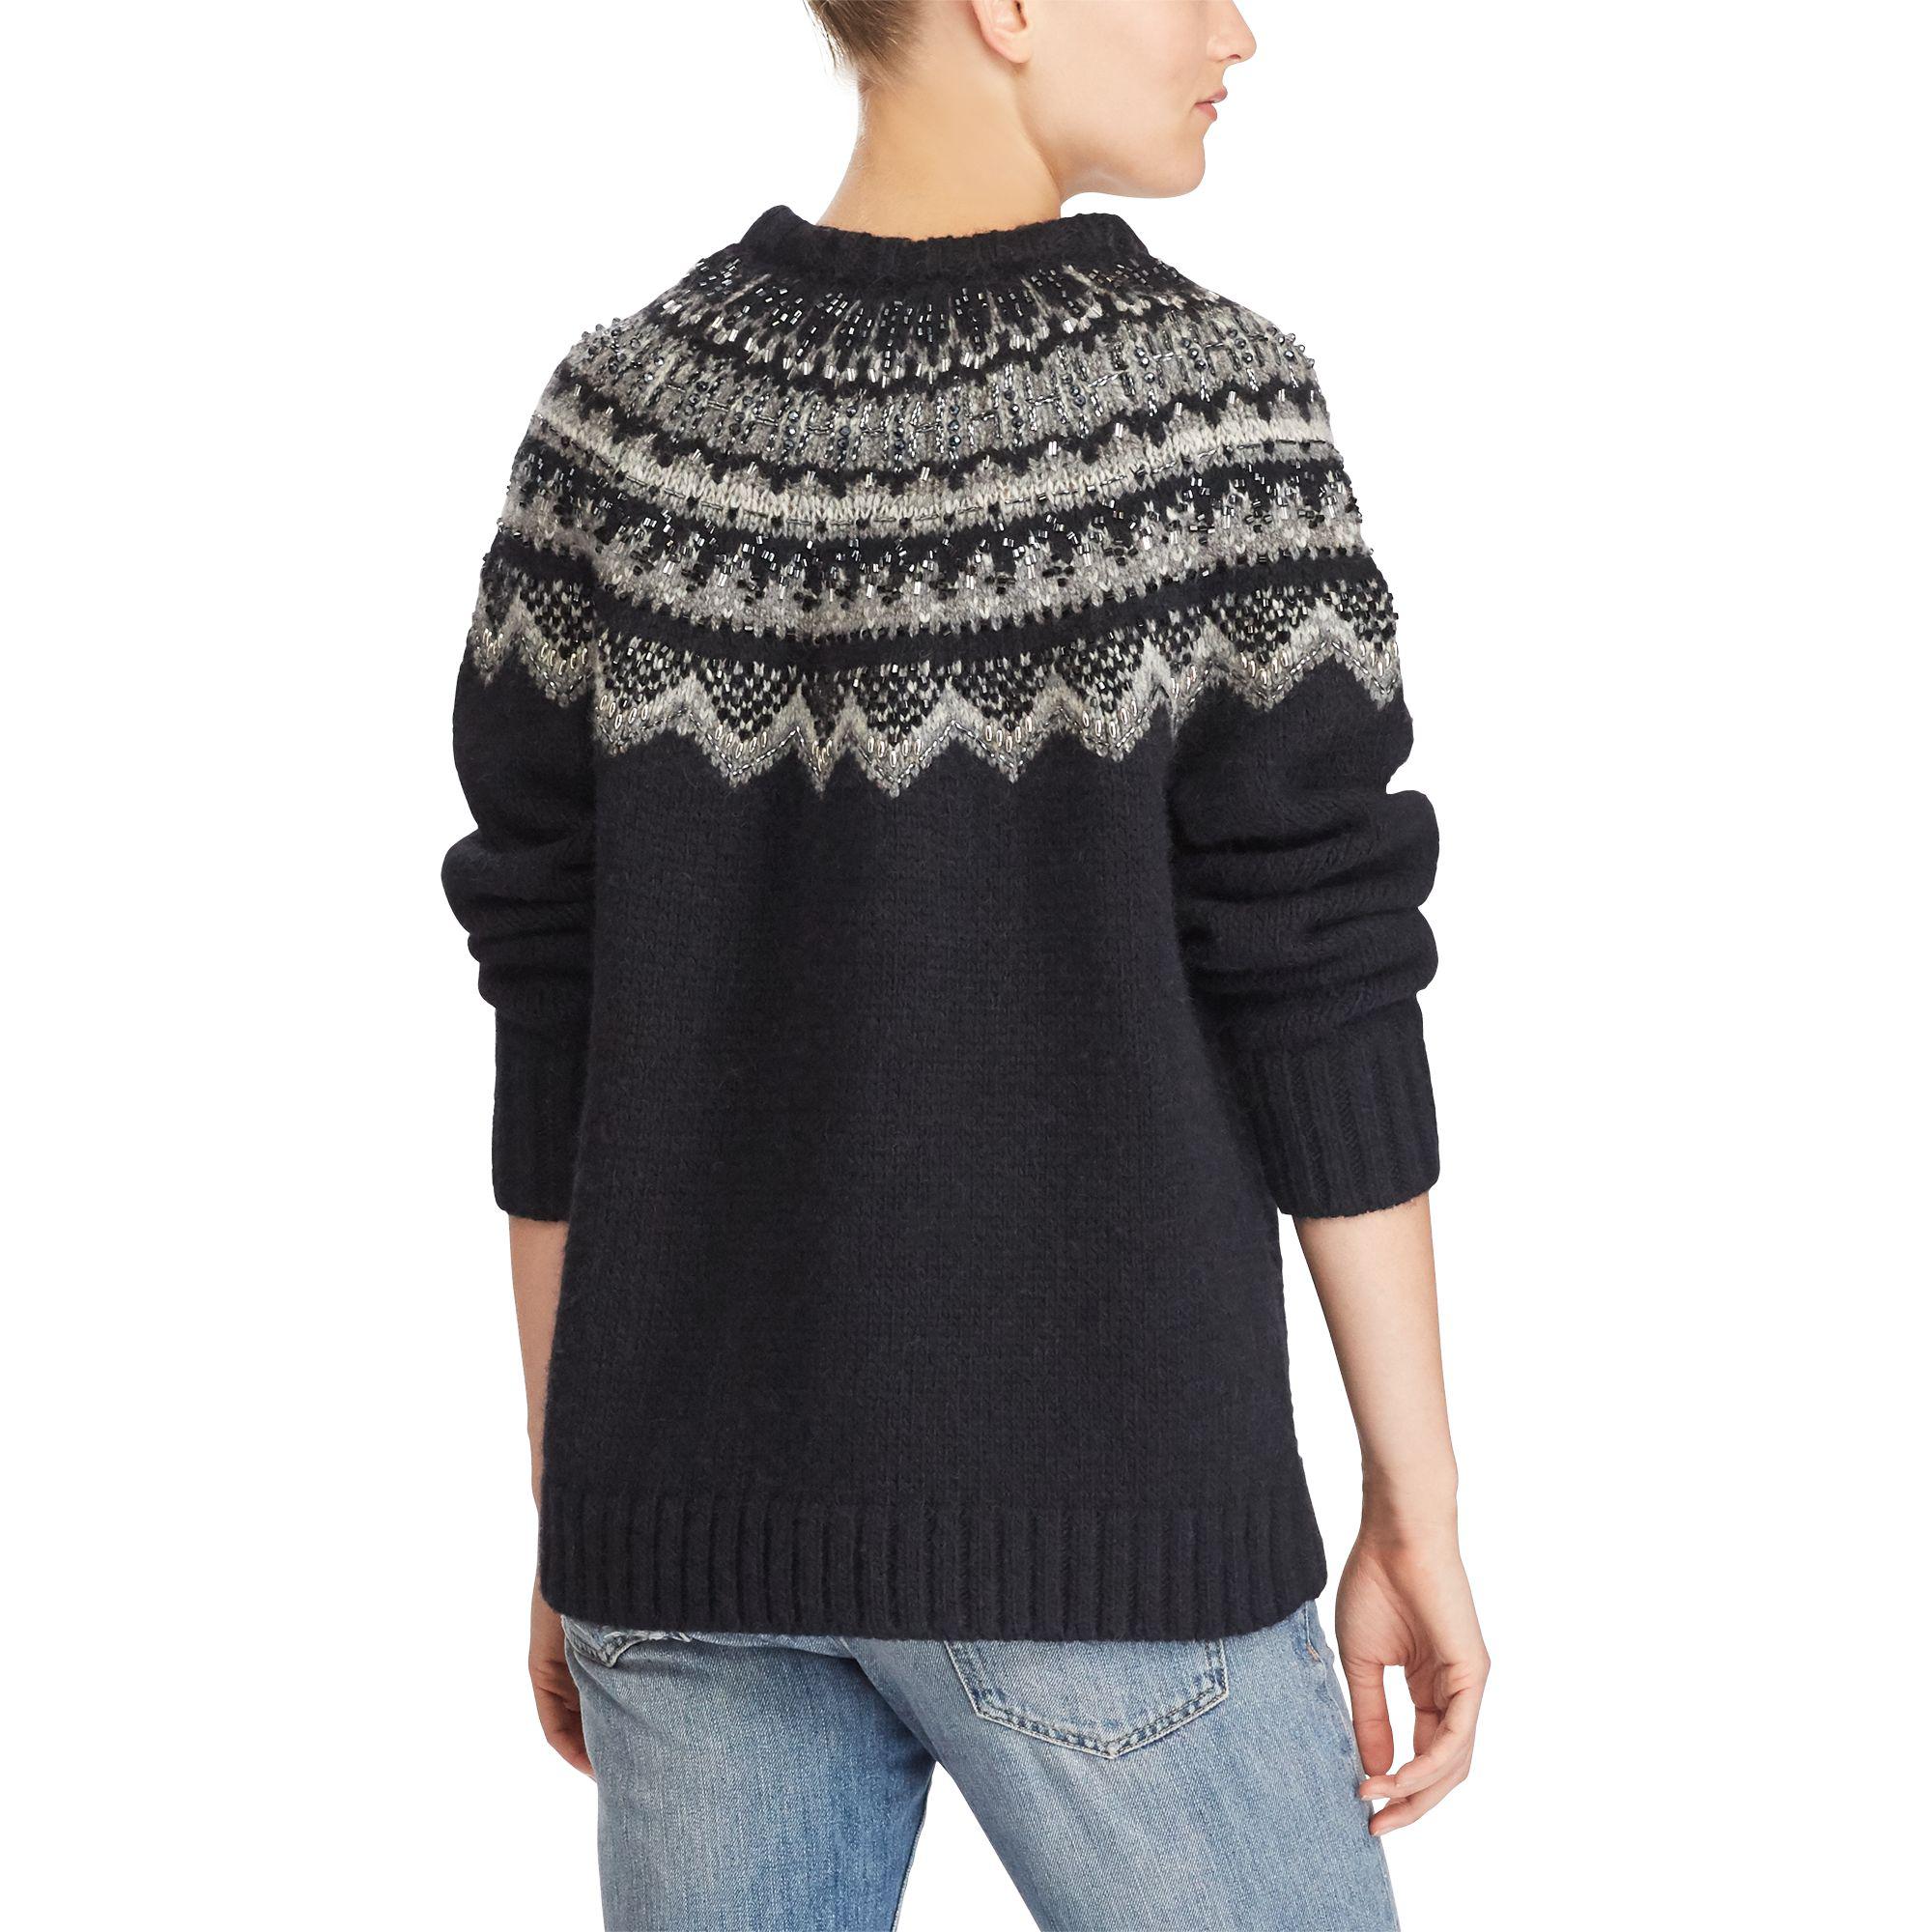 Polo Ralph Lauren Wool Beaded Nordic Sweater in Black/Cream (Black) - Lyst